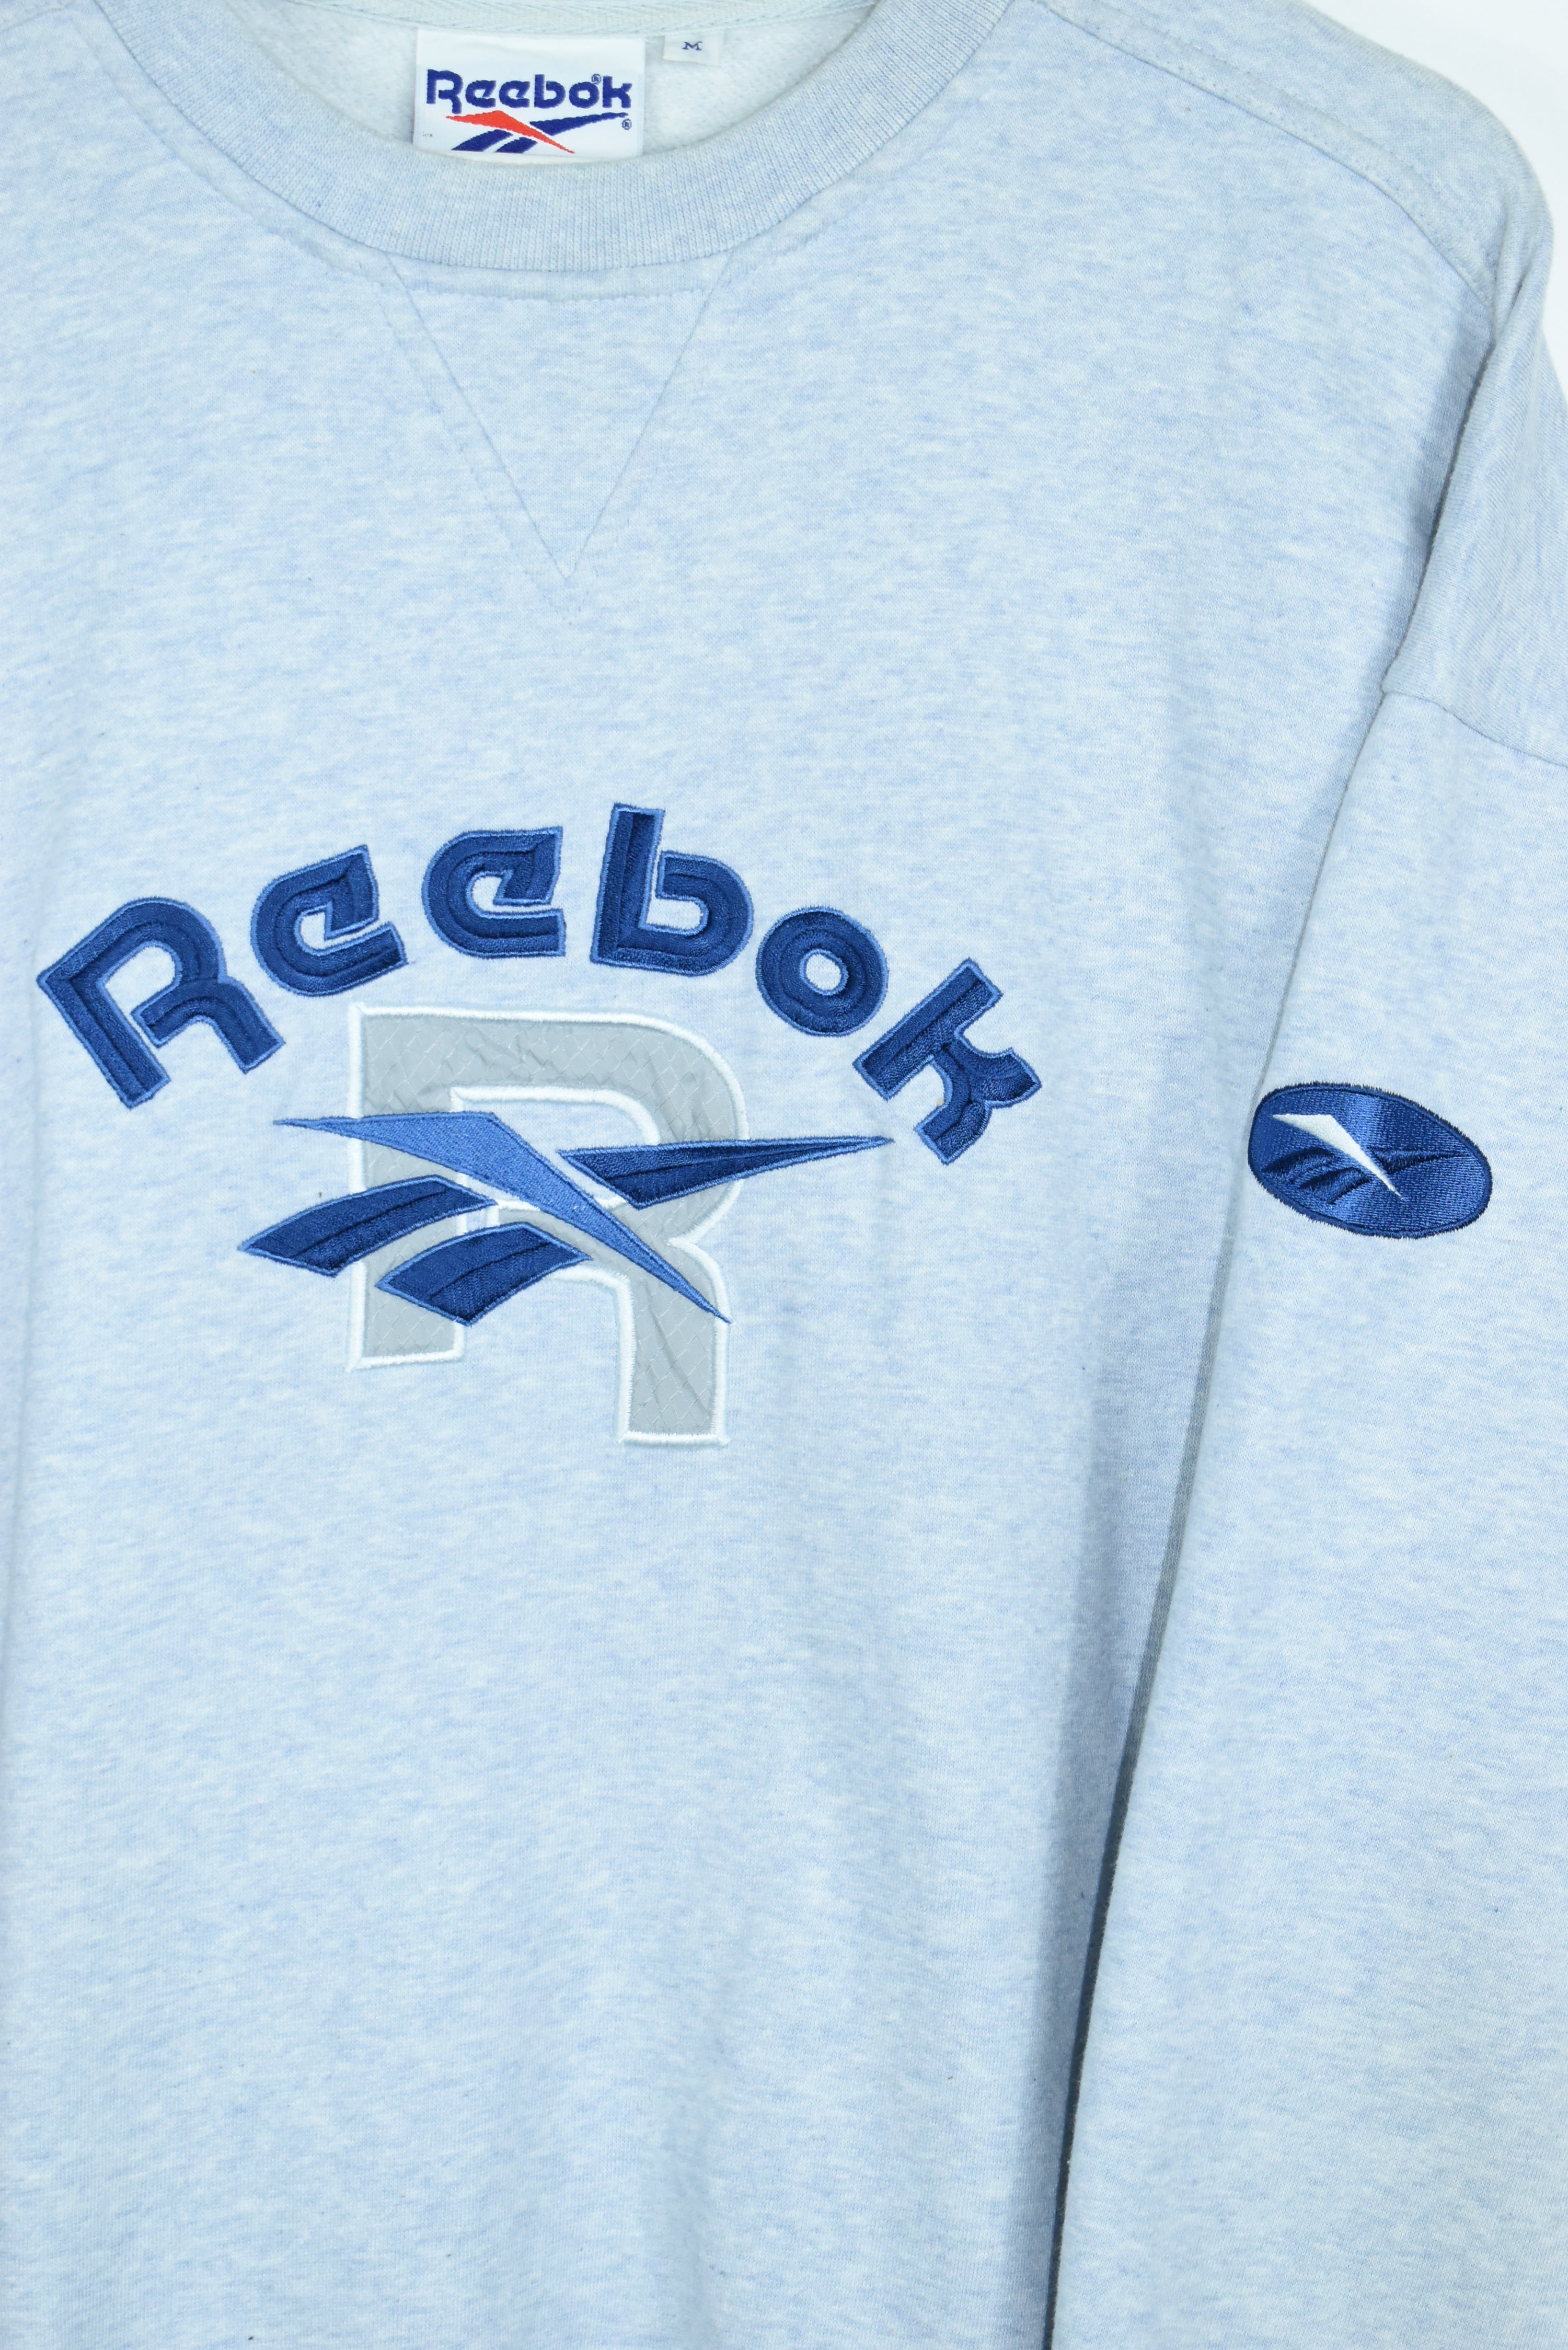 Vintage Reebok Embroidery Logo Sweatshirt LARGE (Baggy)